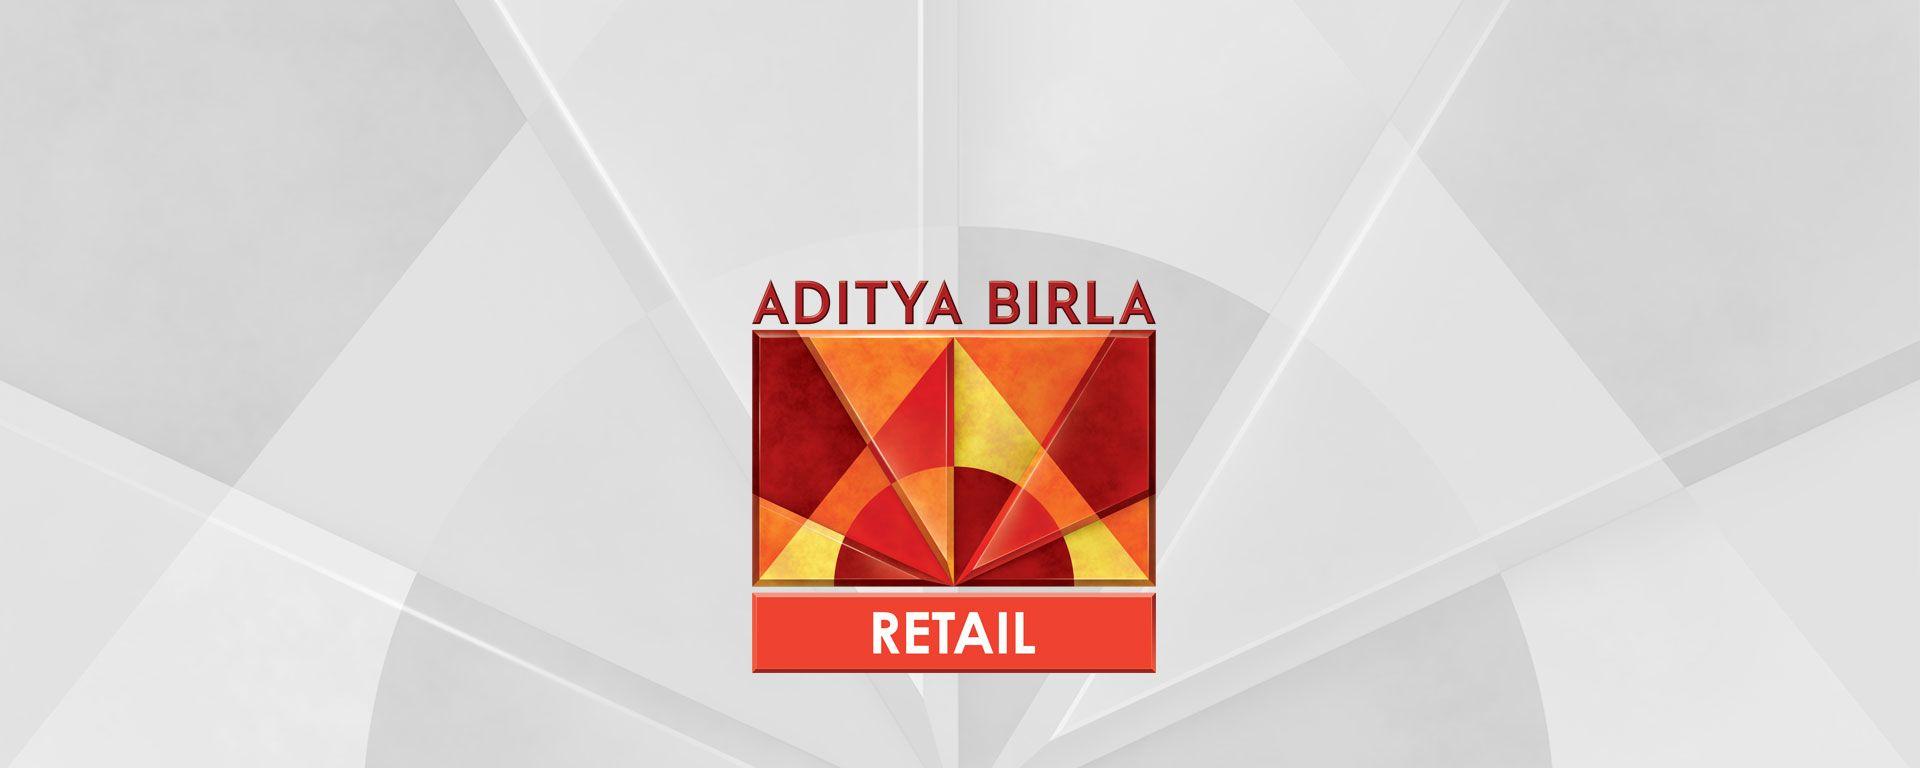 Retail Grocery Store Logo - About Aditya Birla Retail Limited | morestore.com